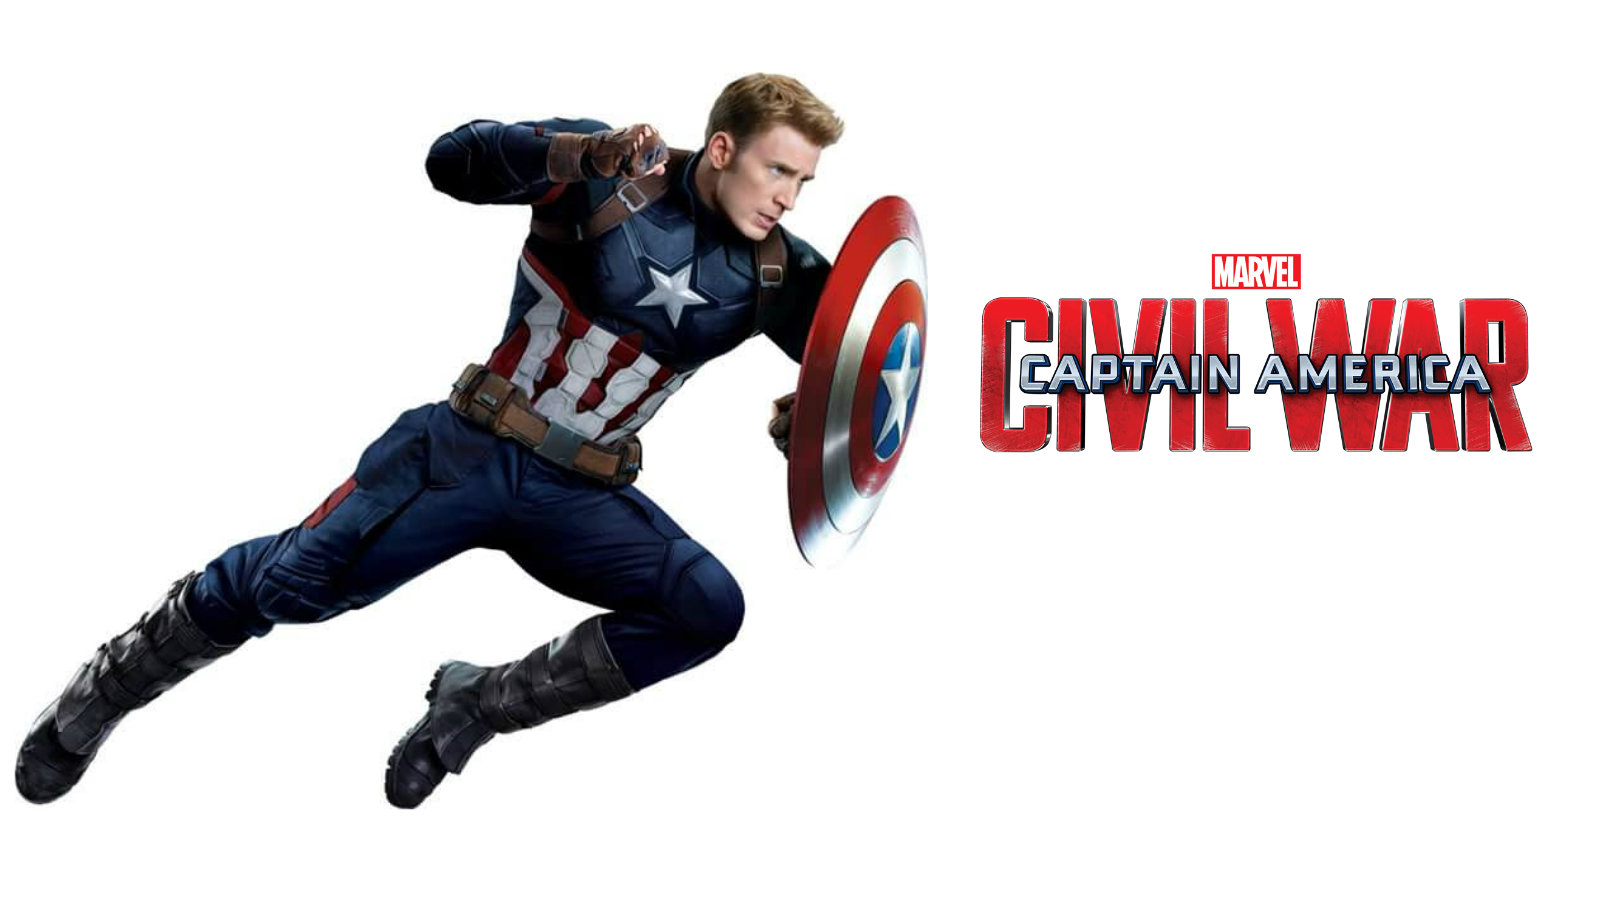 Captain America - Captain America: Civil War Wallpaper (39434670) - Fanpop